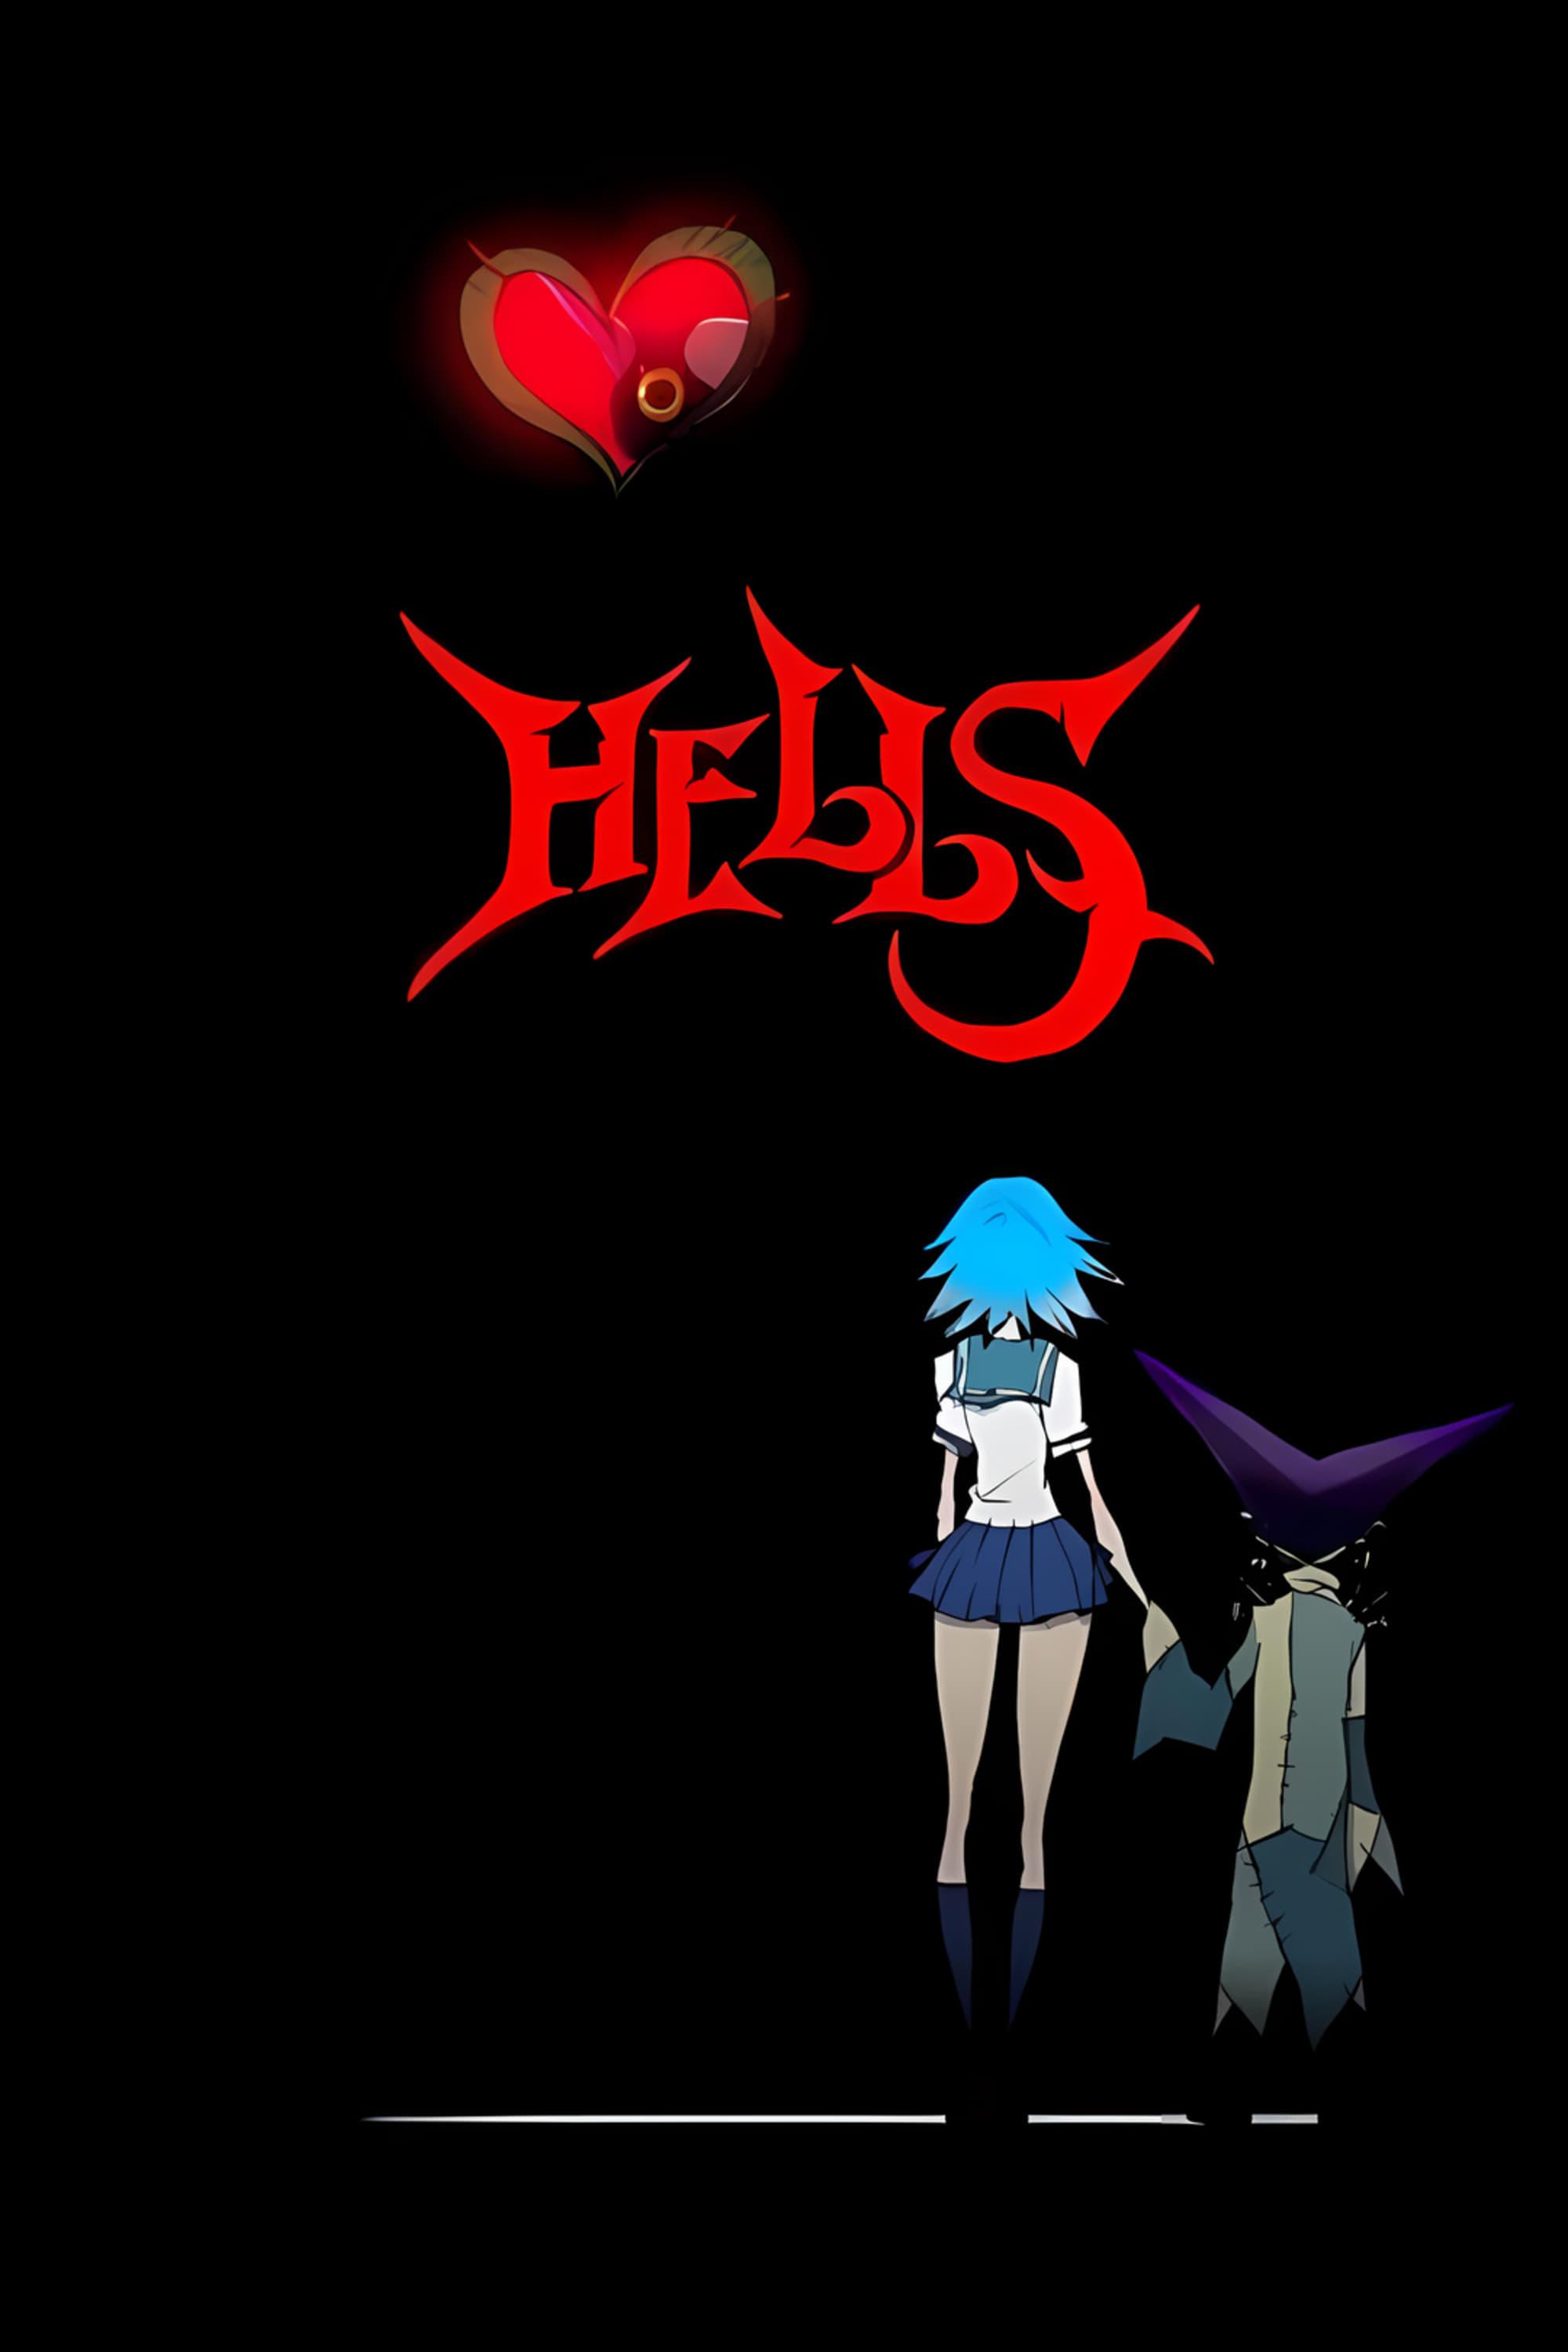 Hells poster